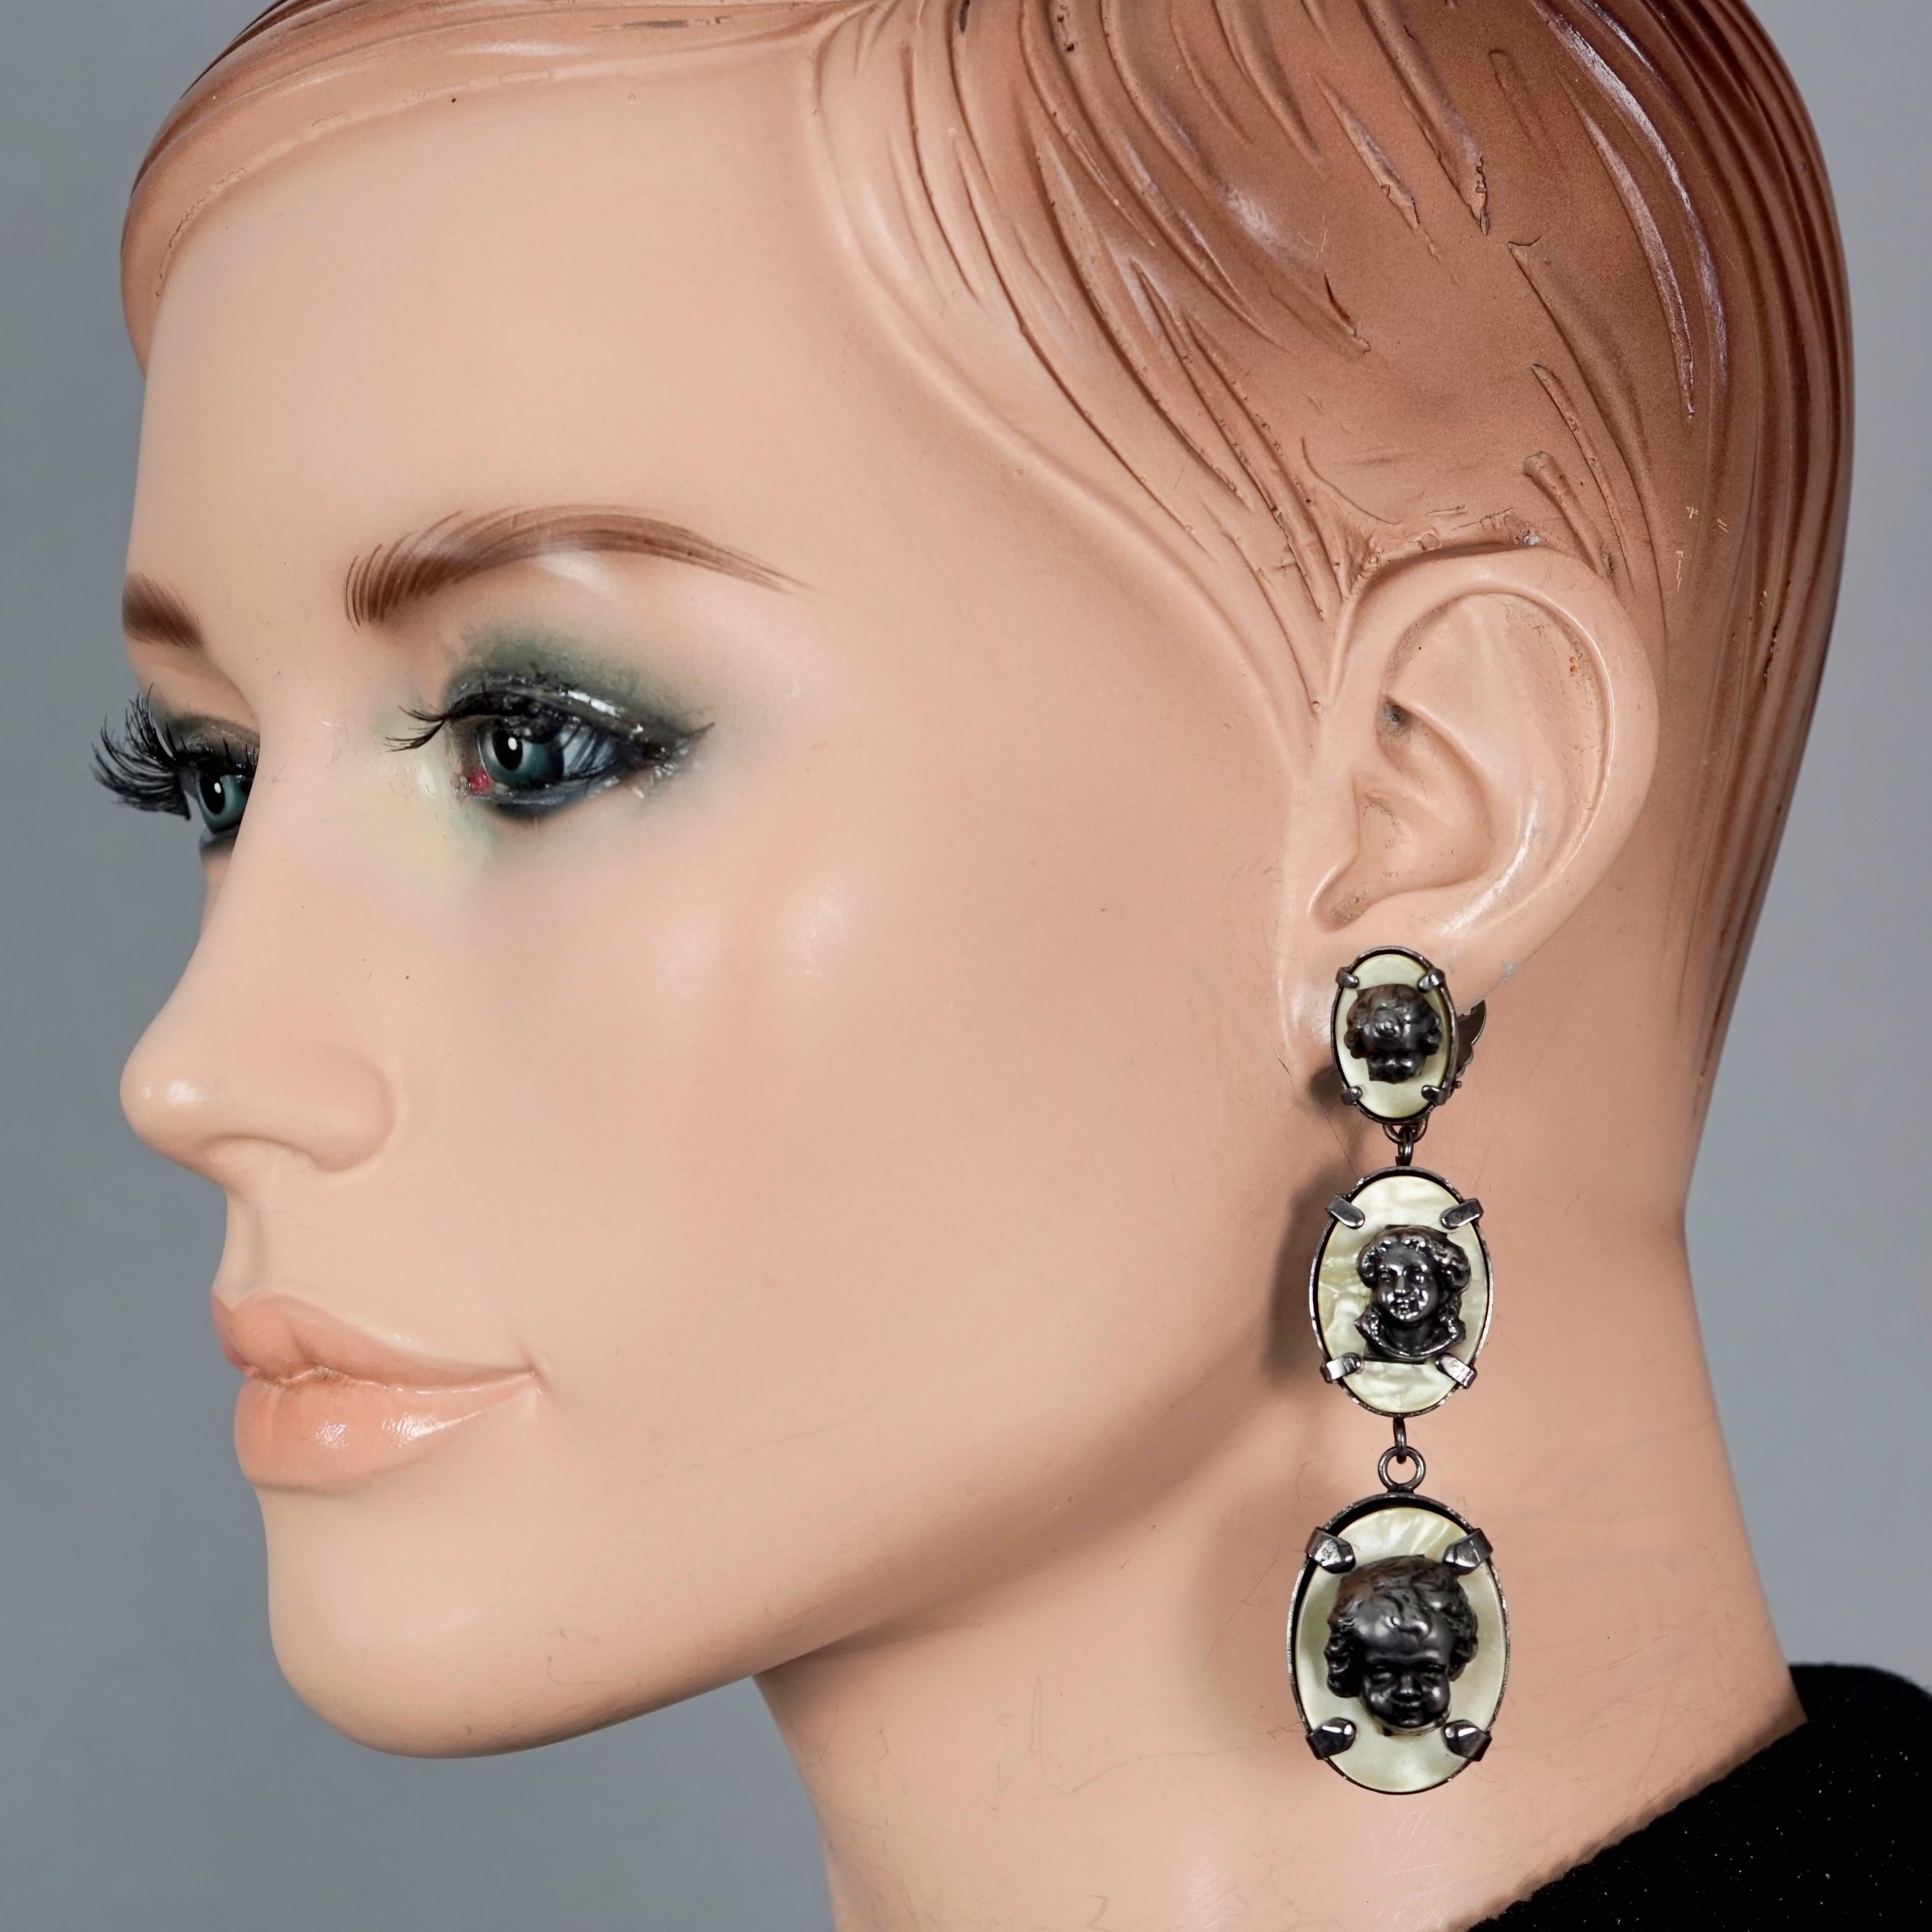 Vintage JEAN PAUL GAULTIER Cherub Nacre Dangling Earrings

Measurements:
Height: 3.34 inches (8.5 cm)
Width: 0.87 inch (2.2 cm)
Weight per Earring: 19 grams

Features:
- 100% Authentic JEAN PAUL GAULTIER.
- Raised metal cherub head on iridescent